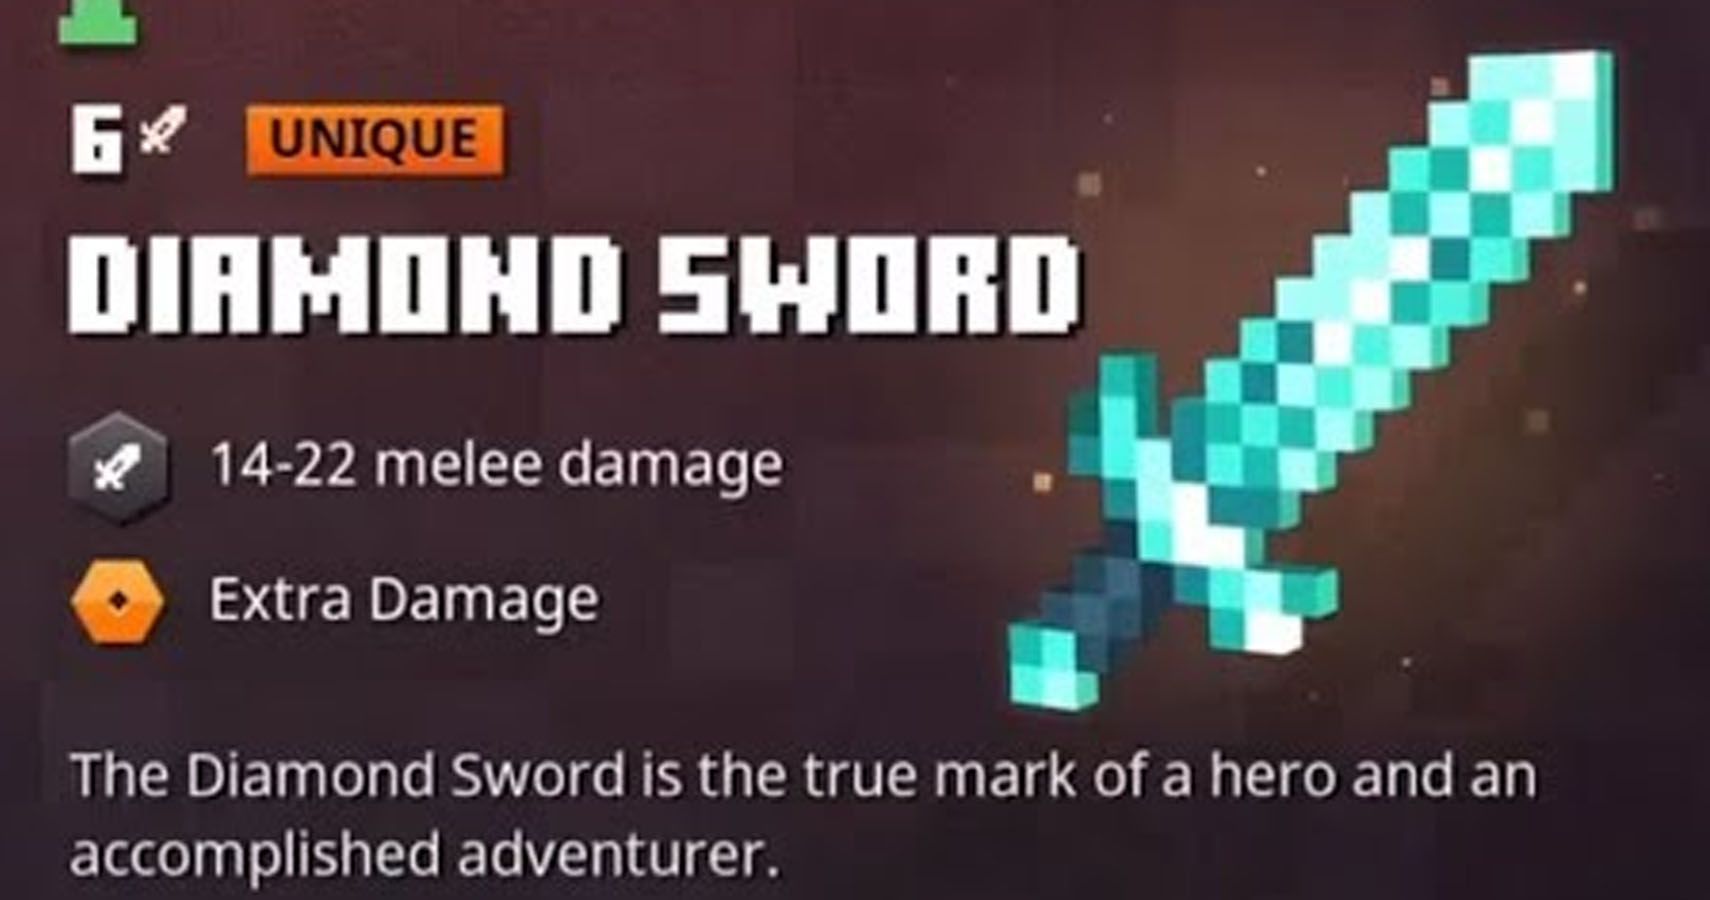 Diaomond sword stats